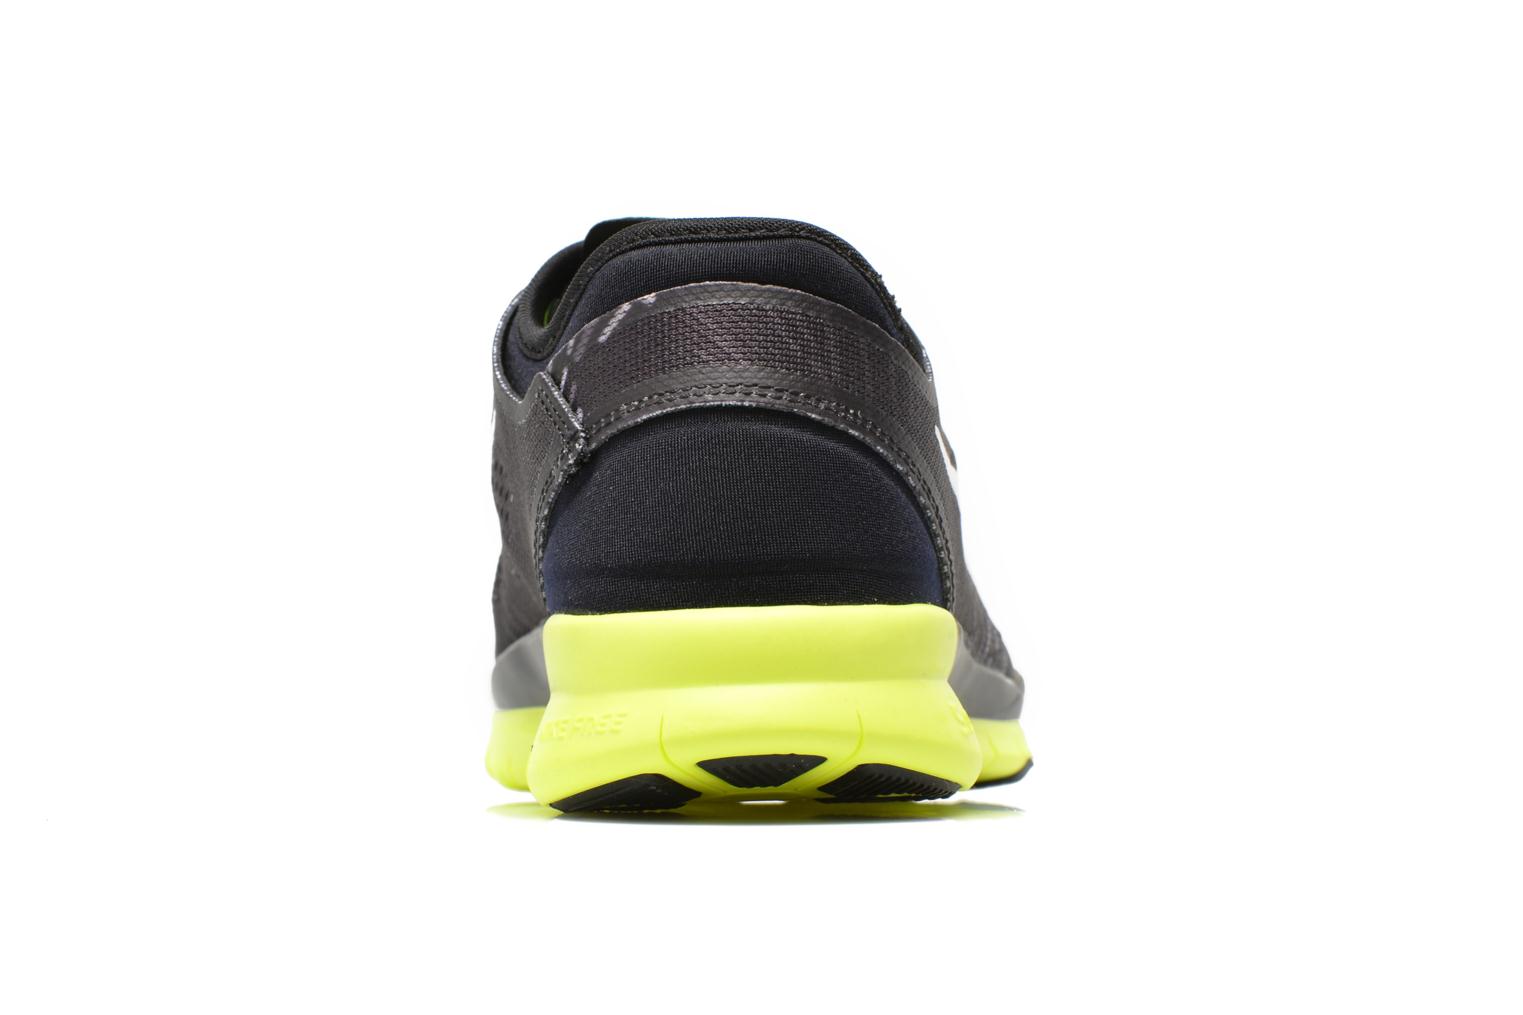 Nike Wmns Nike Free 5.0 Tr Fit 5 Prt (Black) - Sport shoes chez Sarenza ...